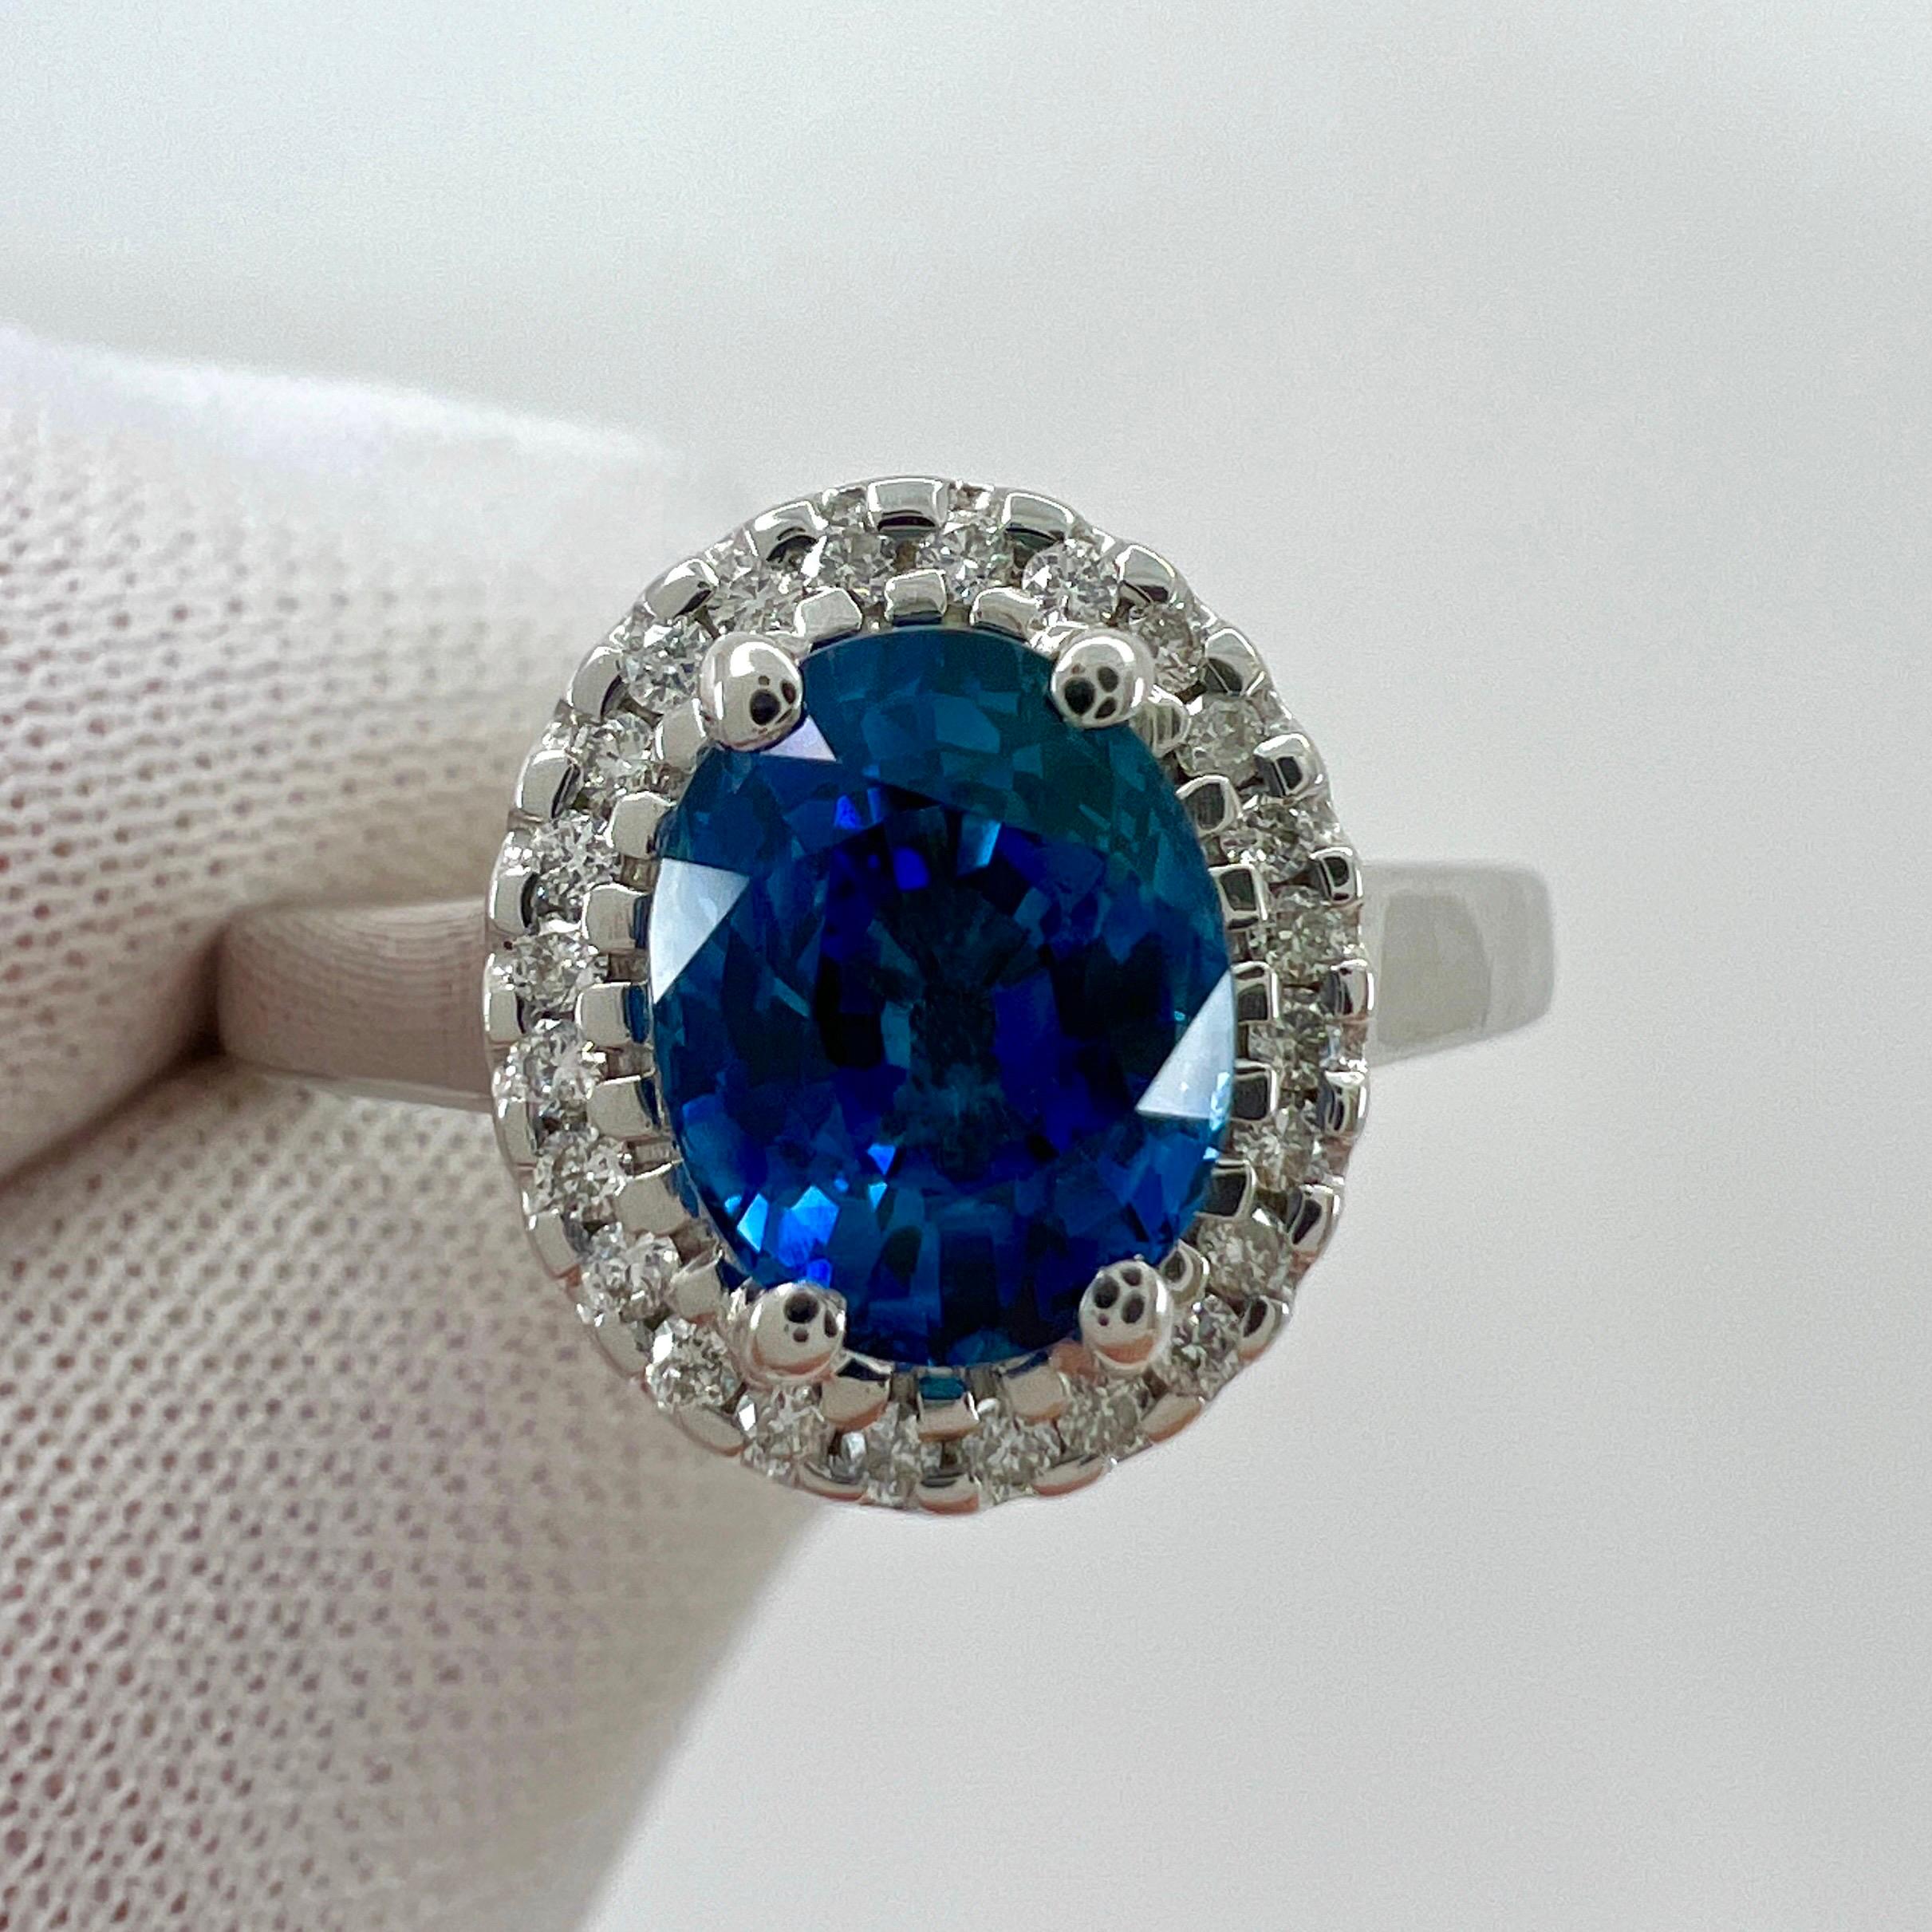 Oval Cut 1.56 Carat Fine Vivid Blue Ceylon Sapphire And Diamond 18k White Gold Halo Ring For Sale